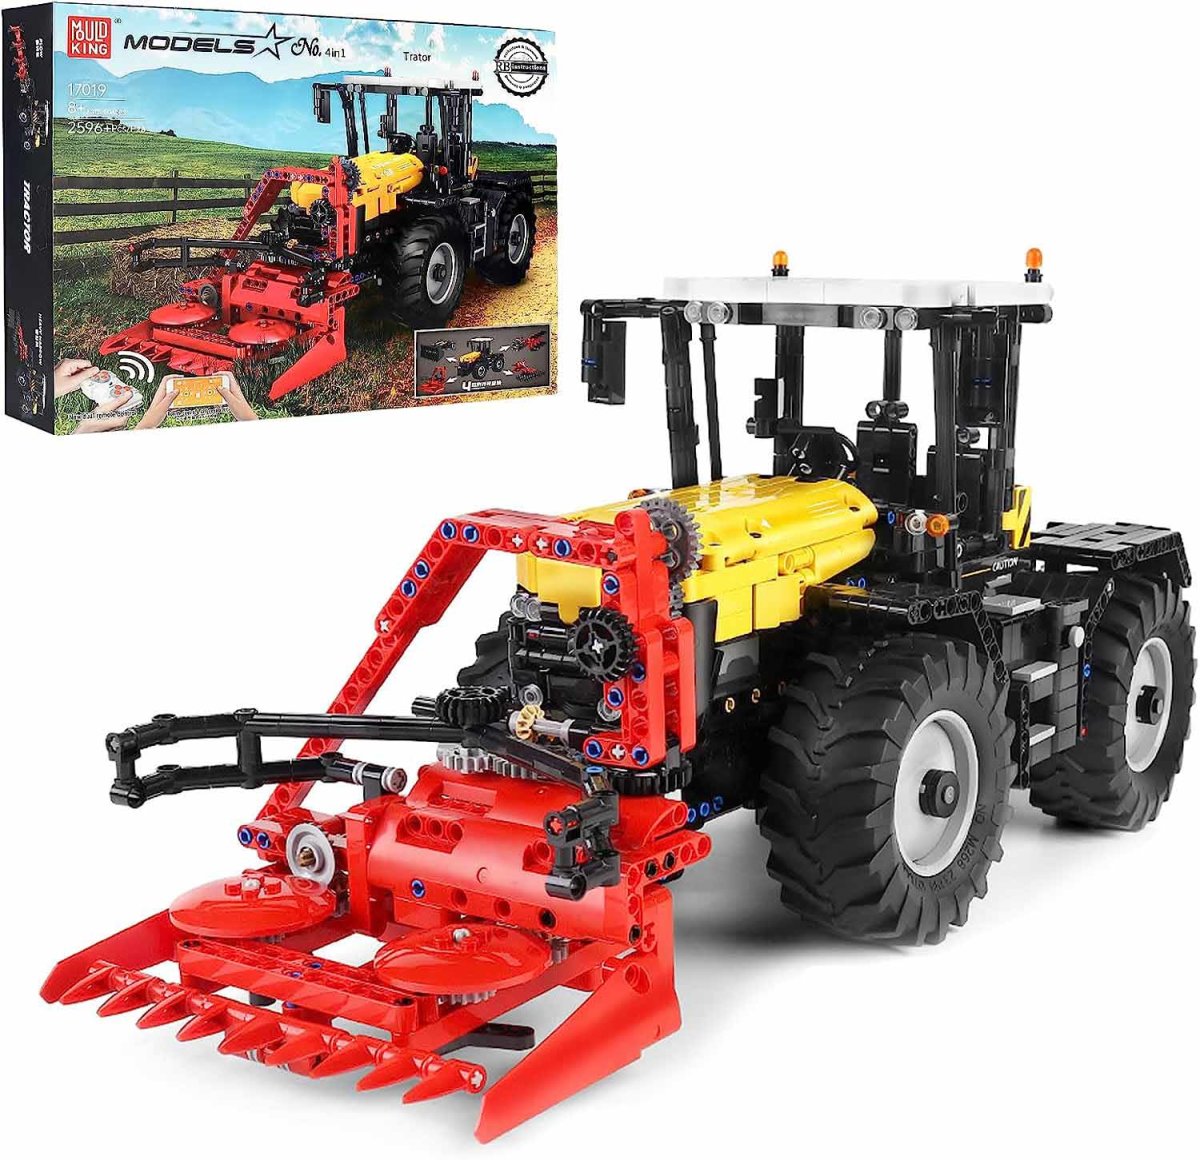 https://brickcoast.de/media/image/product/5760/lg/mould-king-17019-4in1-tractor-no1-traktor-inkl-rc-fernsteuerung.jpg